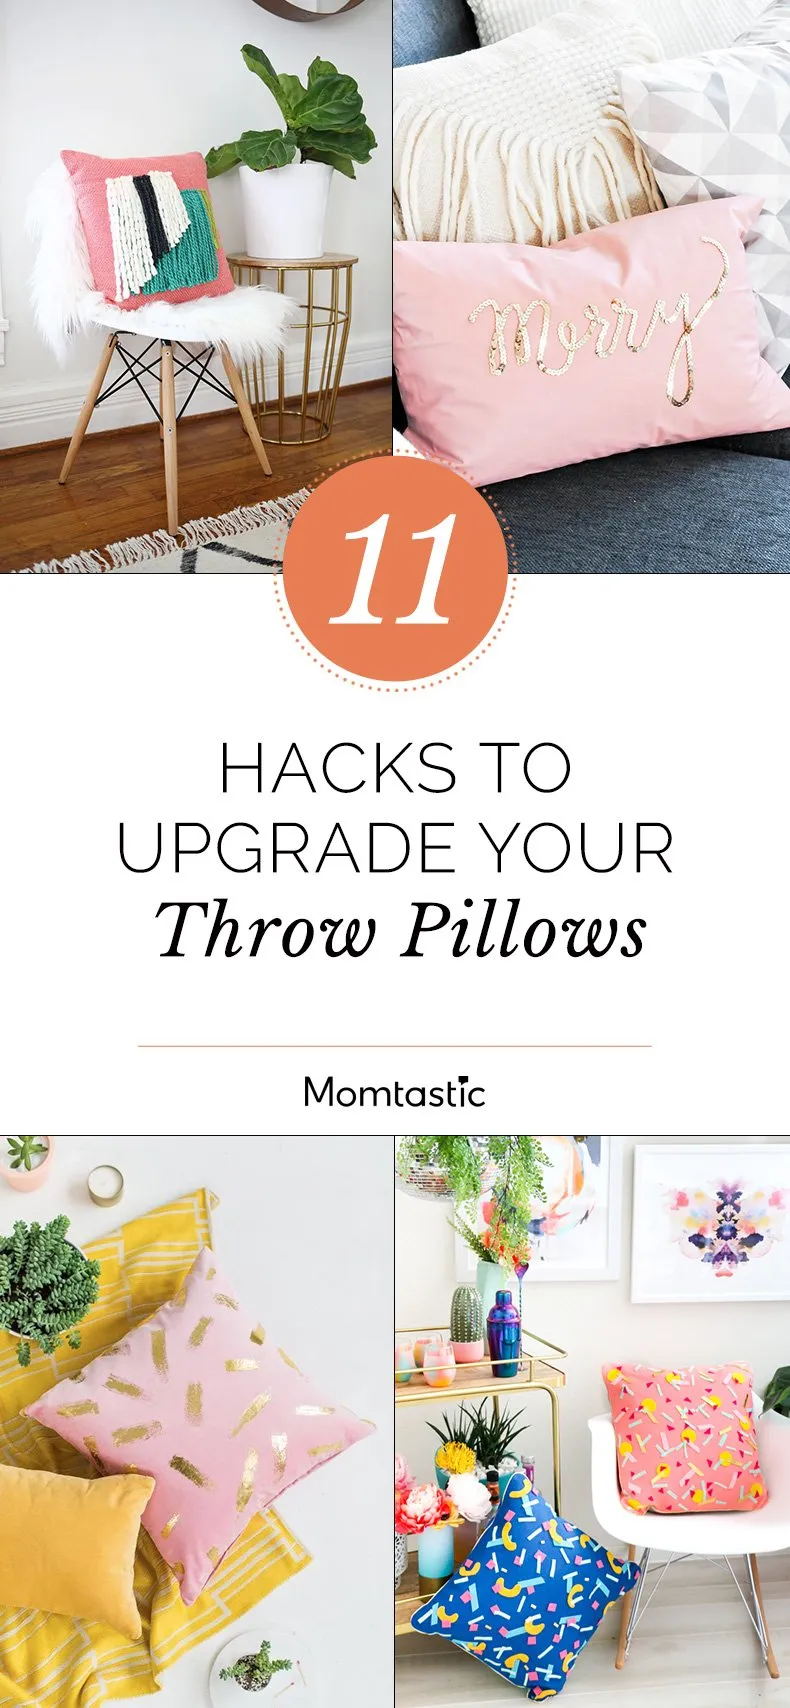 11 Hacks To Upgrade Your Throw Pillows